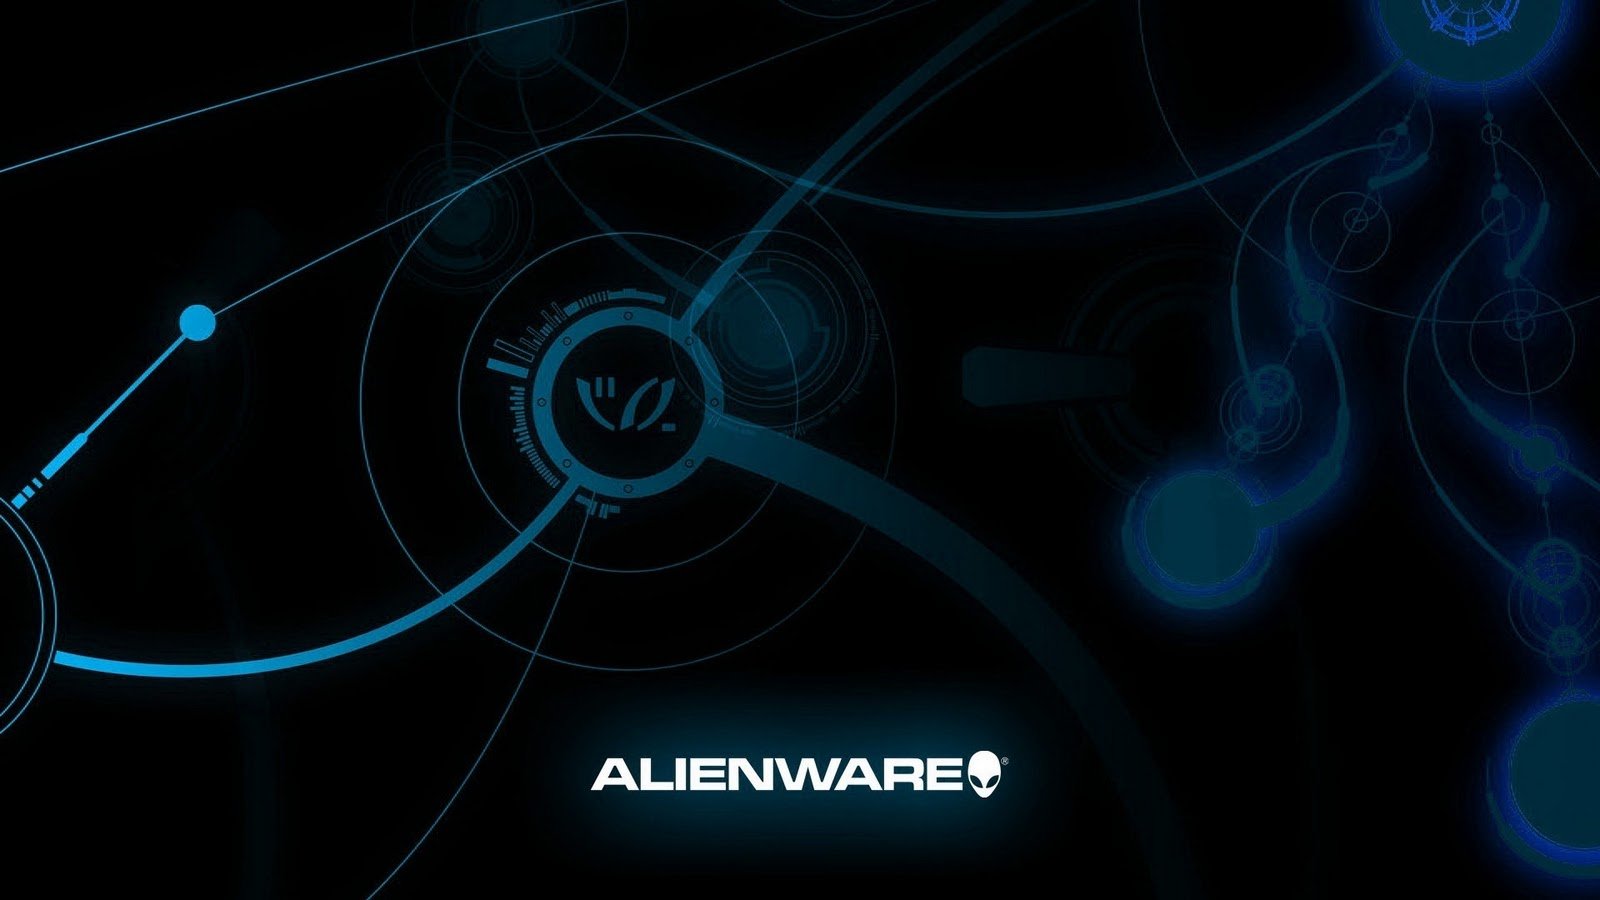 Alienware For Windows 7 Alienware Logon Background